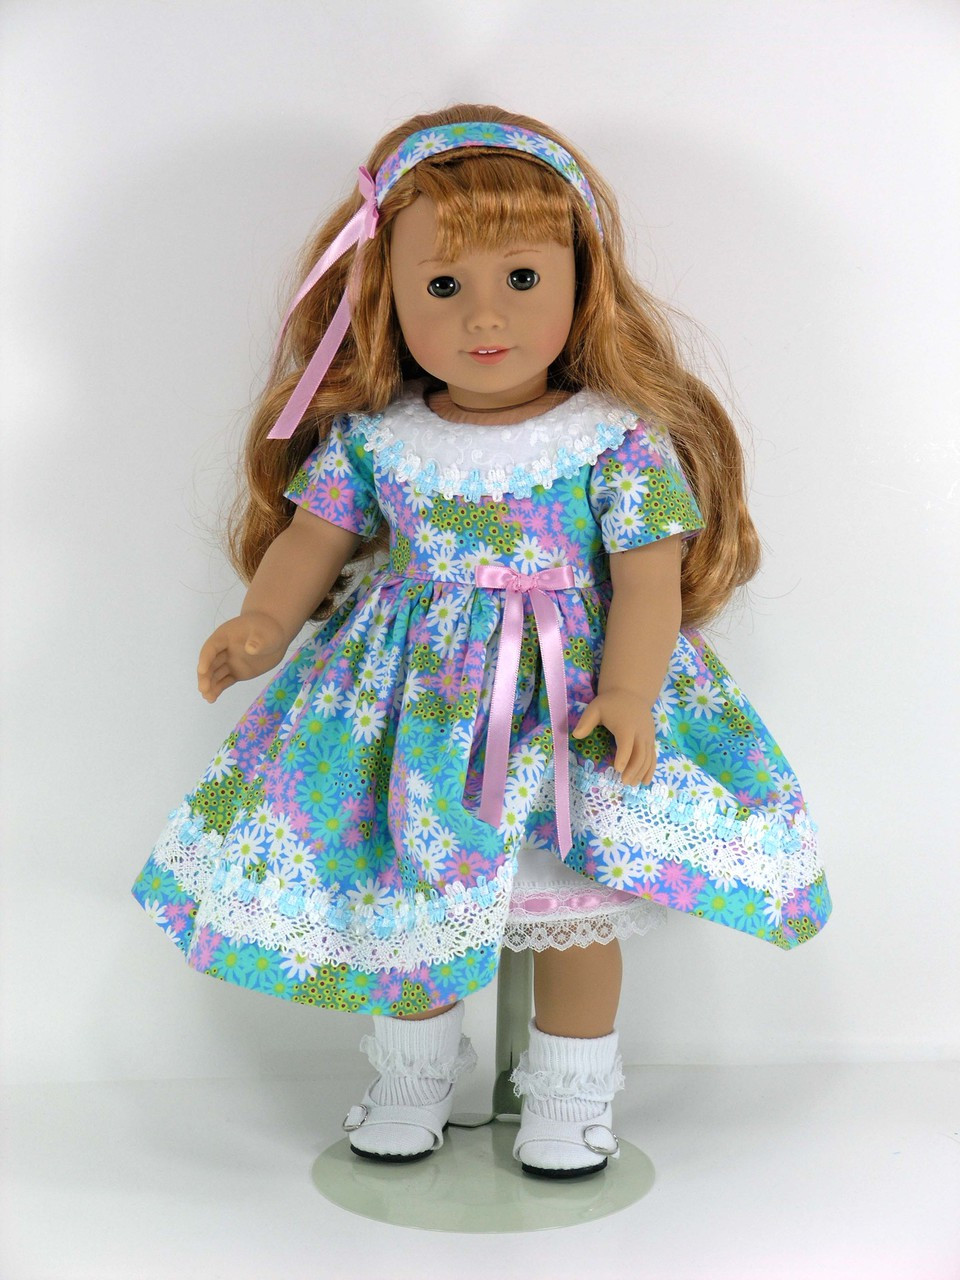 18 inch Doll Clothes Handmade for American Girl - Dress, Headband